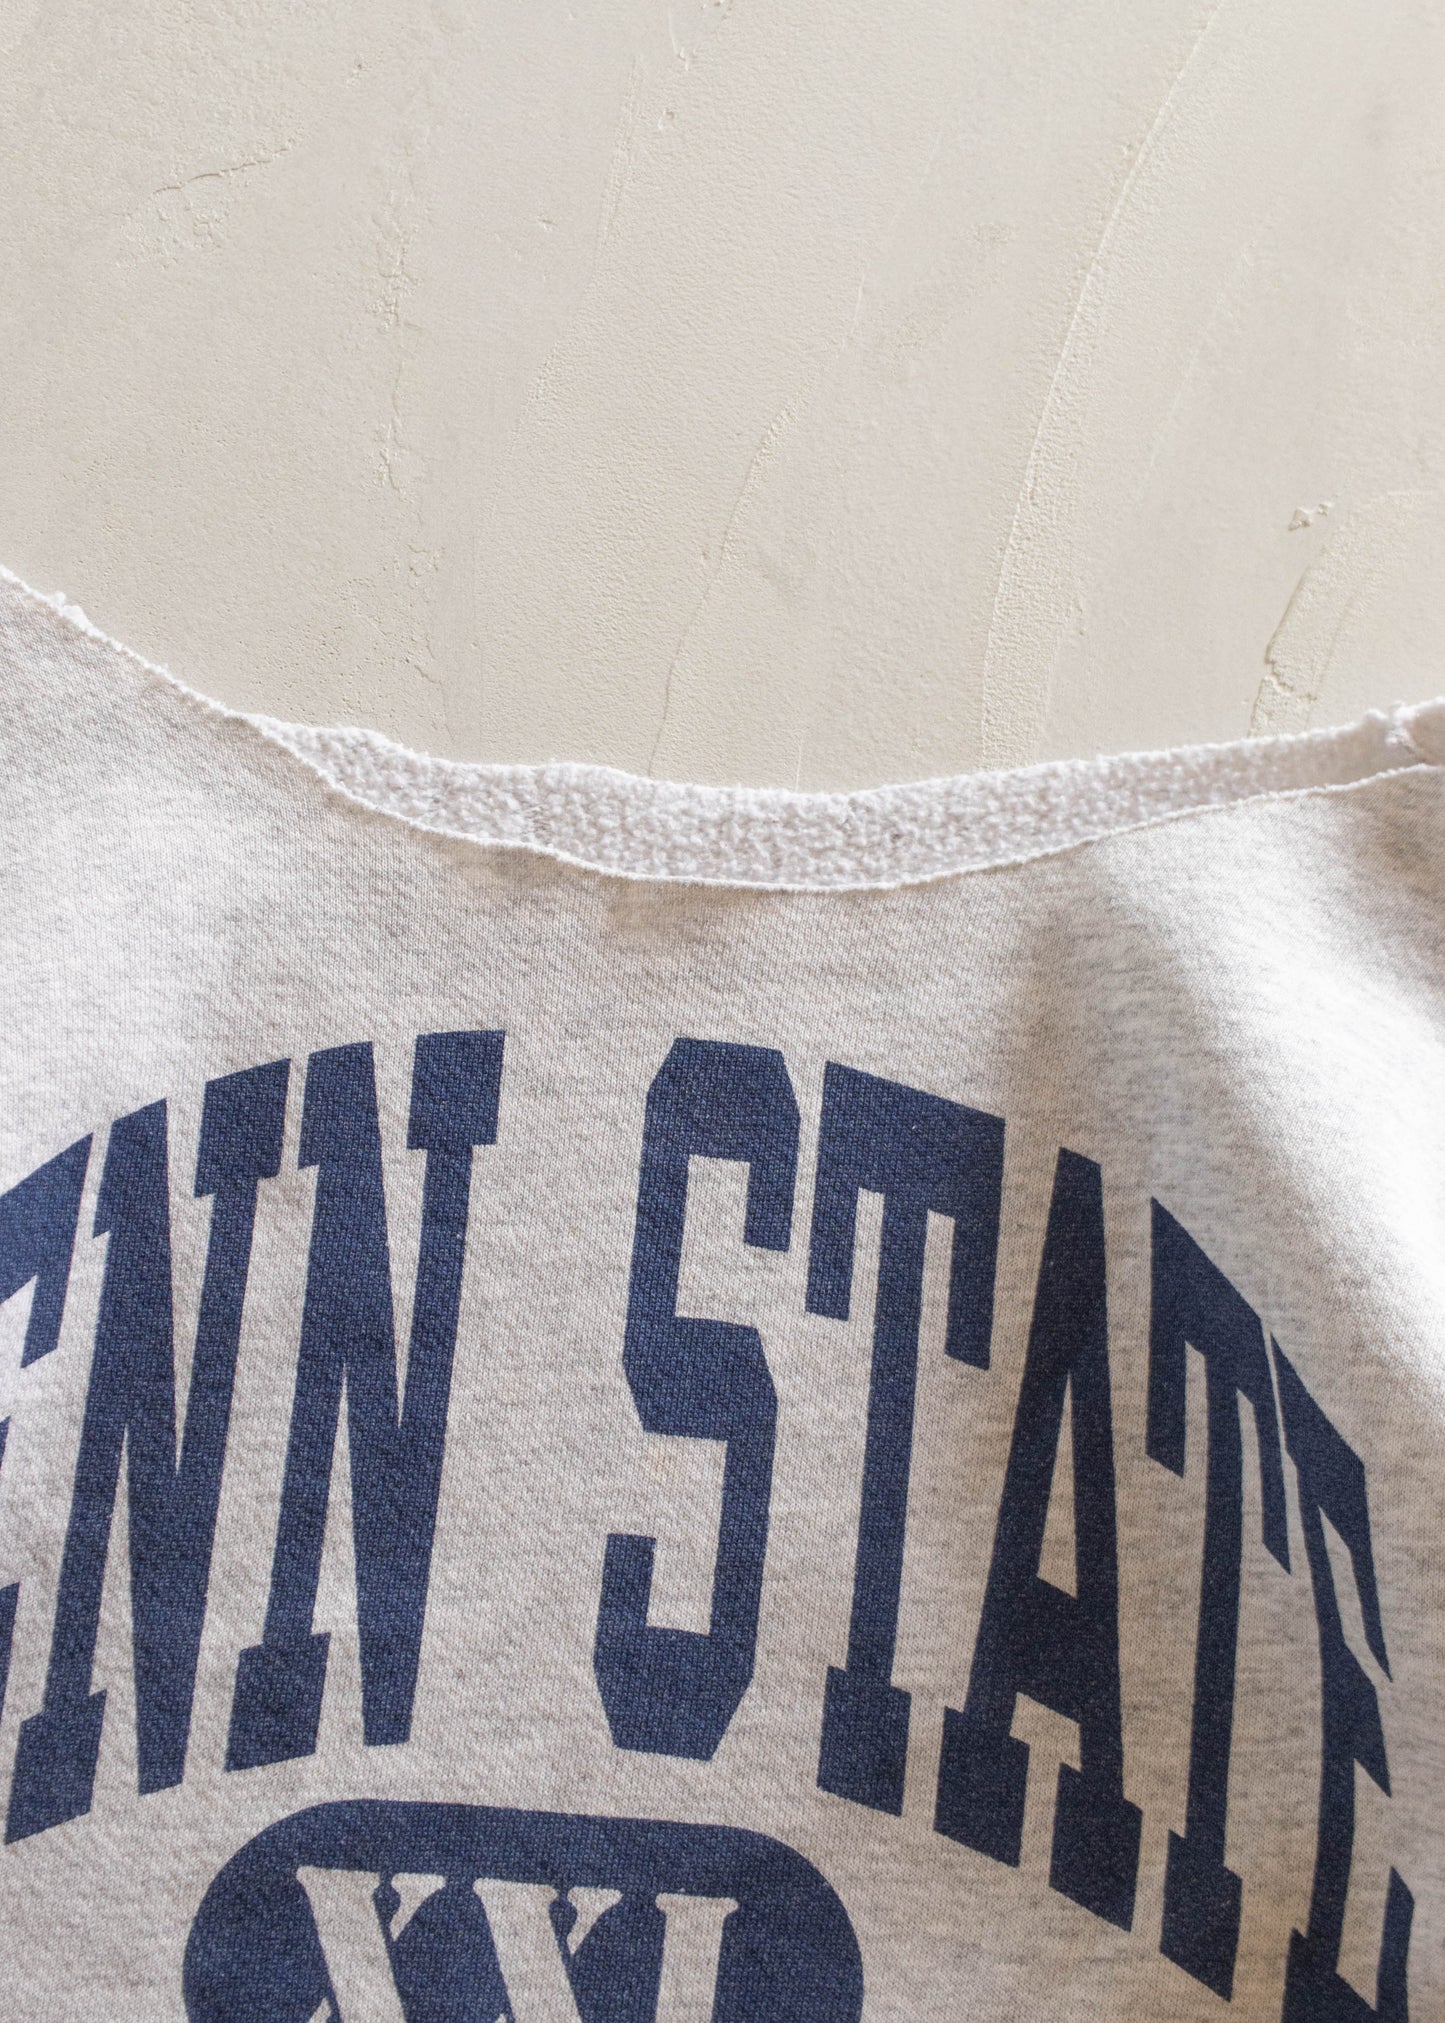 1980s Penn States XXL Athletics Sweatshirt Size M/L